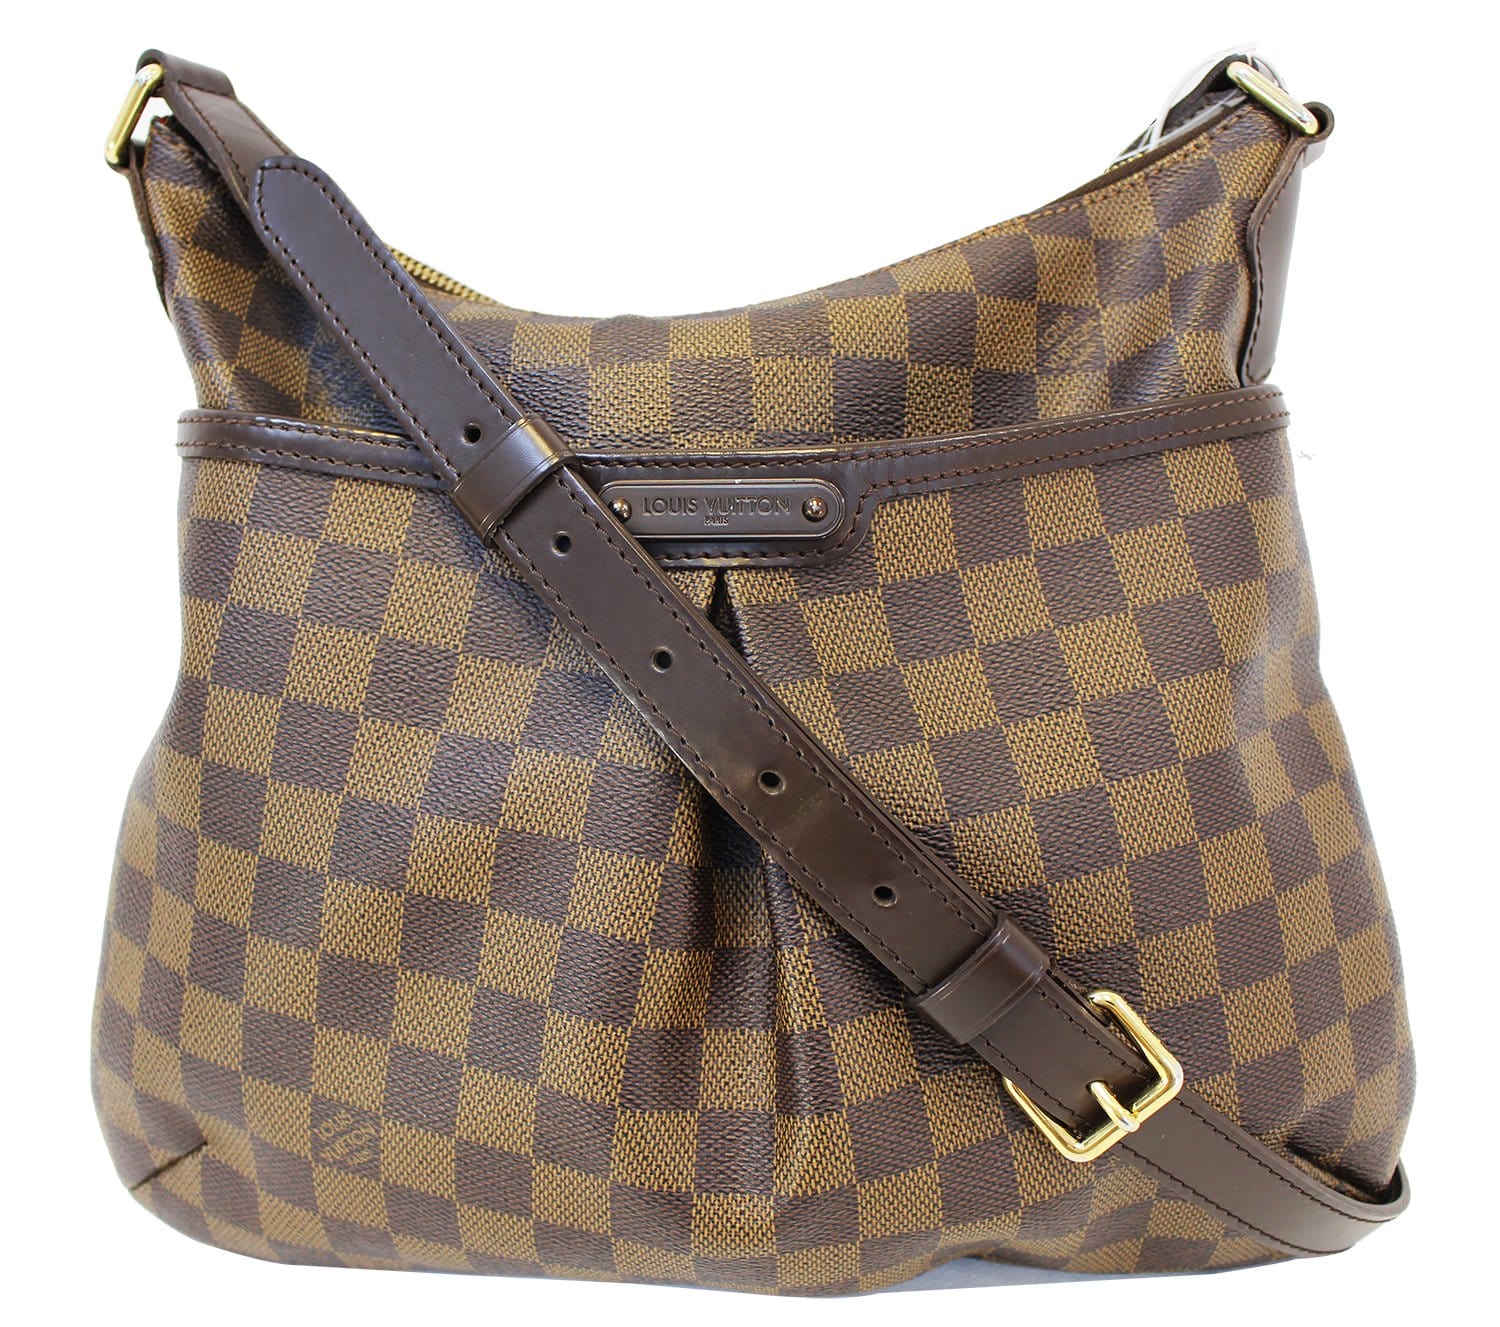 Louis Vuitton Bloomsbury PM Damier Ebene Shoulder Bag on SALE